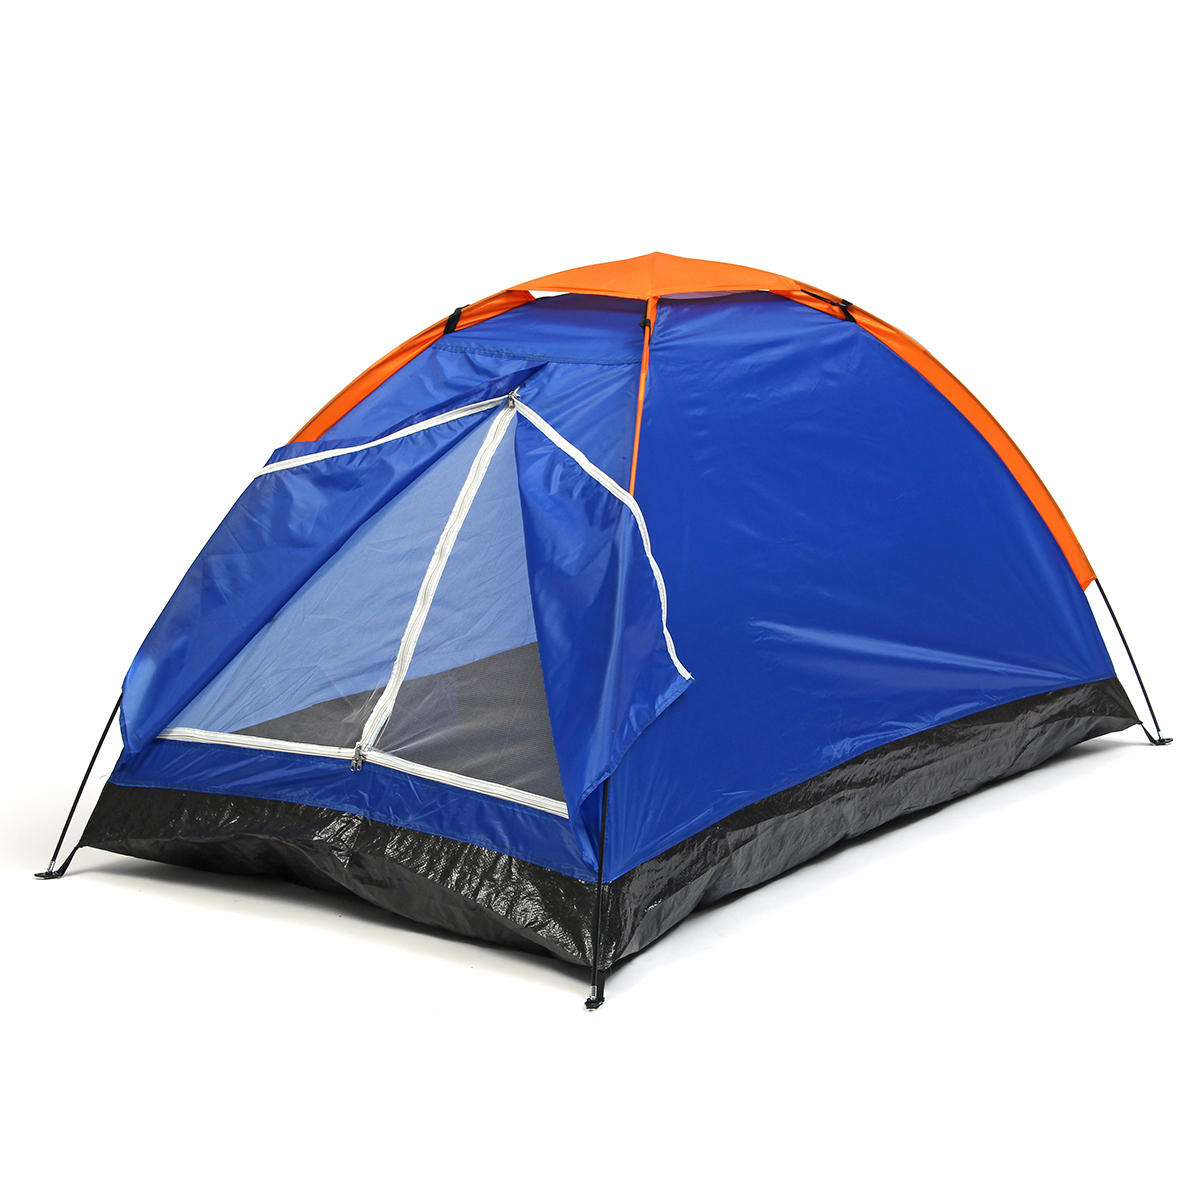 Outdoor 1-2 persoon dubbele camping tent enkele laag Waterproof UV Beach zonnescherm Luifel